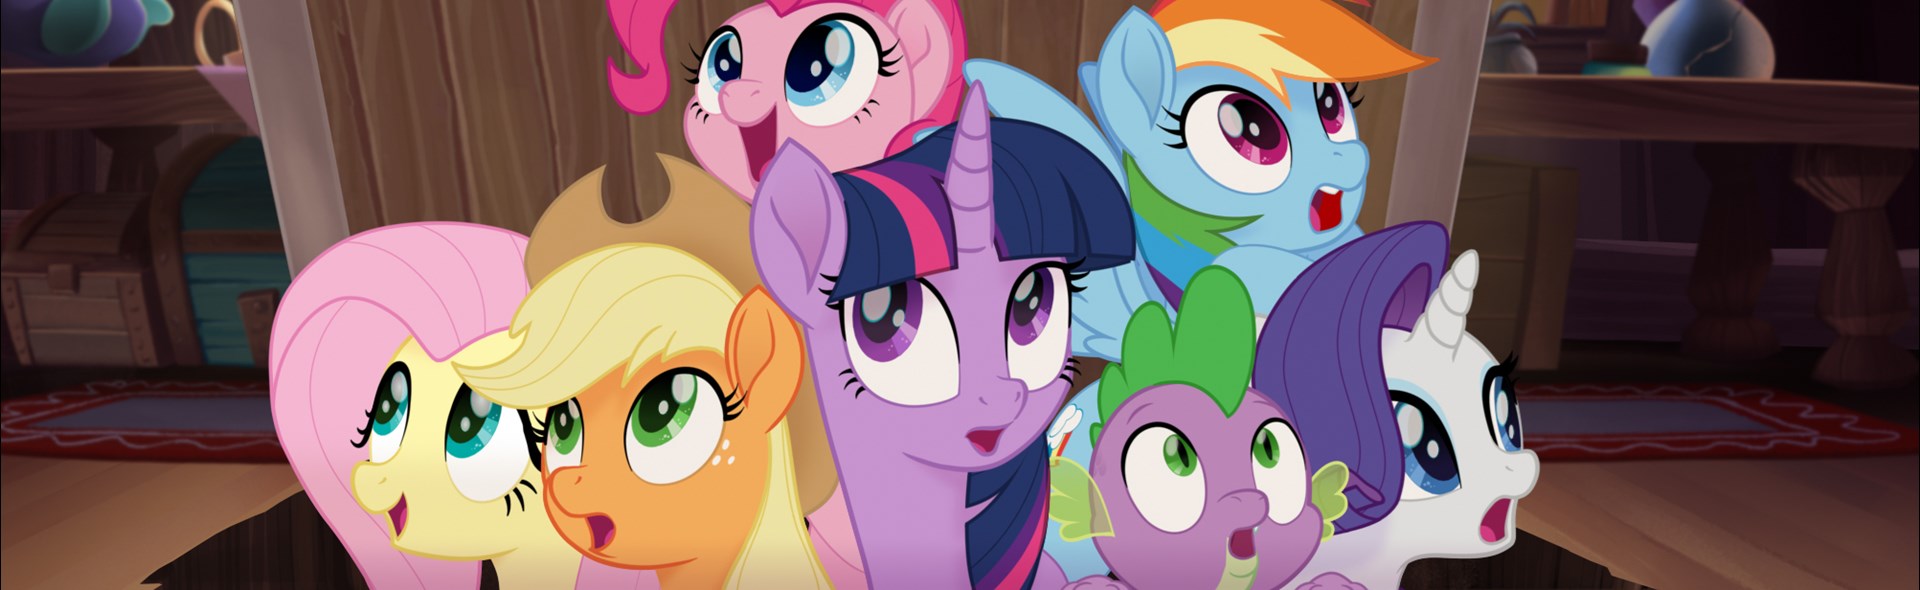 Family Film Fun Screening: My Little Pony - The Movie (PG)